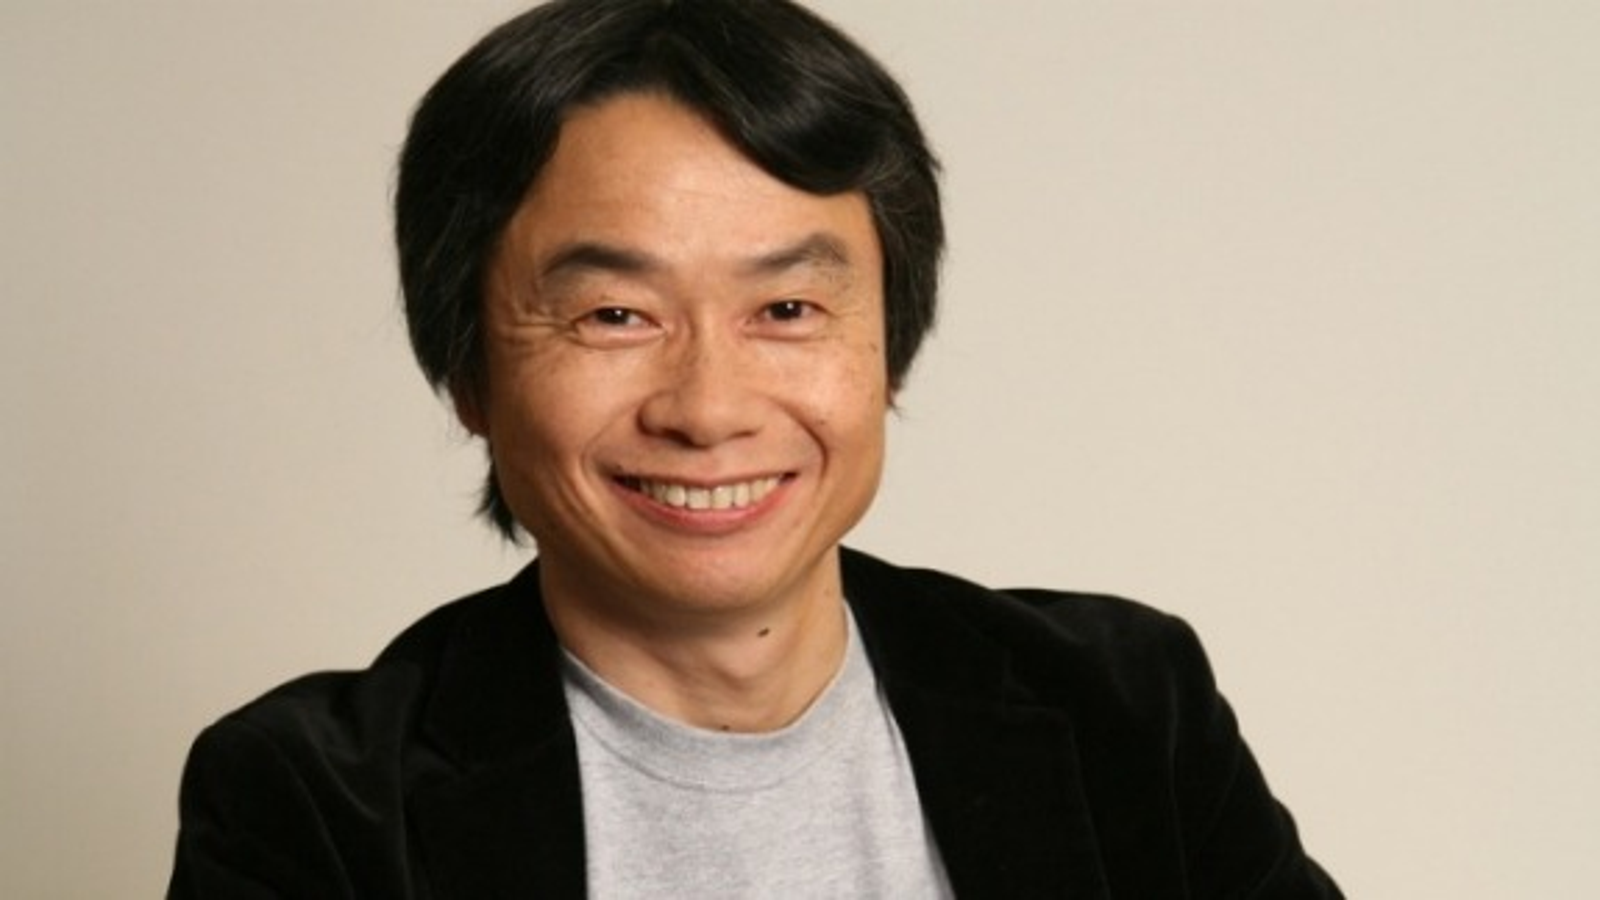 Shigeru Miyamoto Imagines What Nintendo Will Be Like After He's Gone - IGN